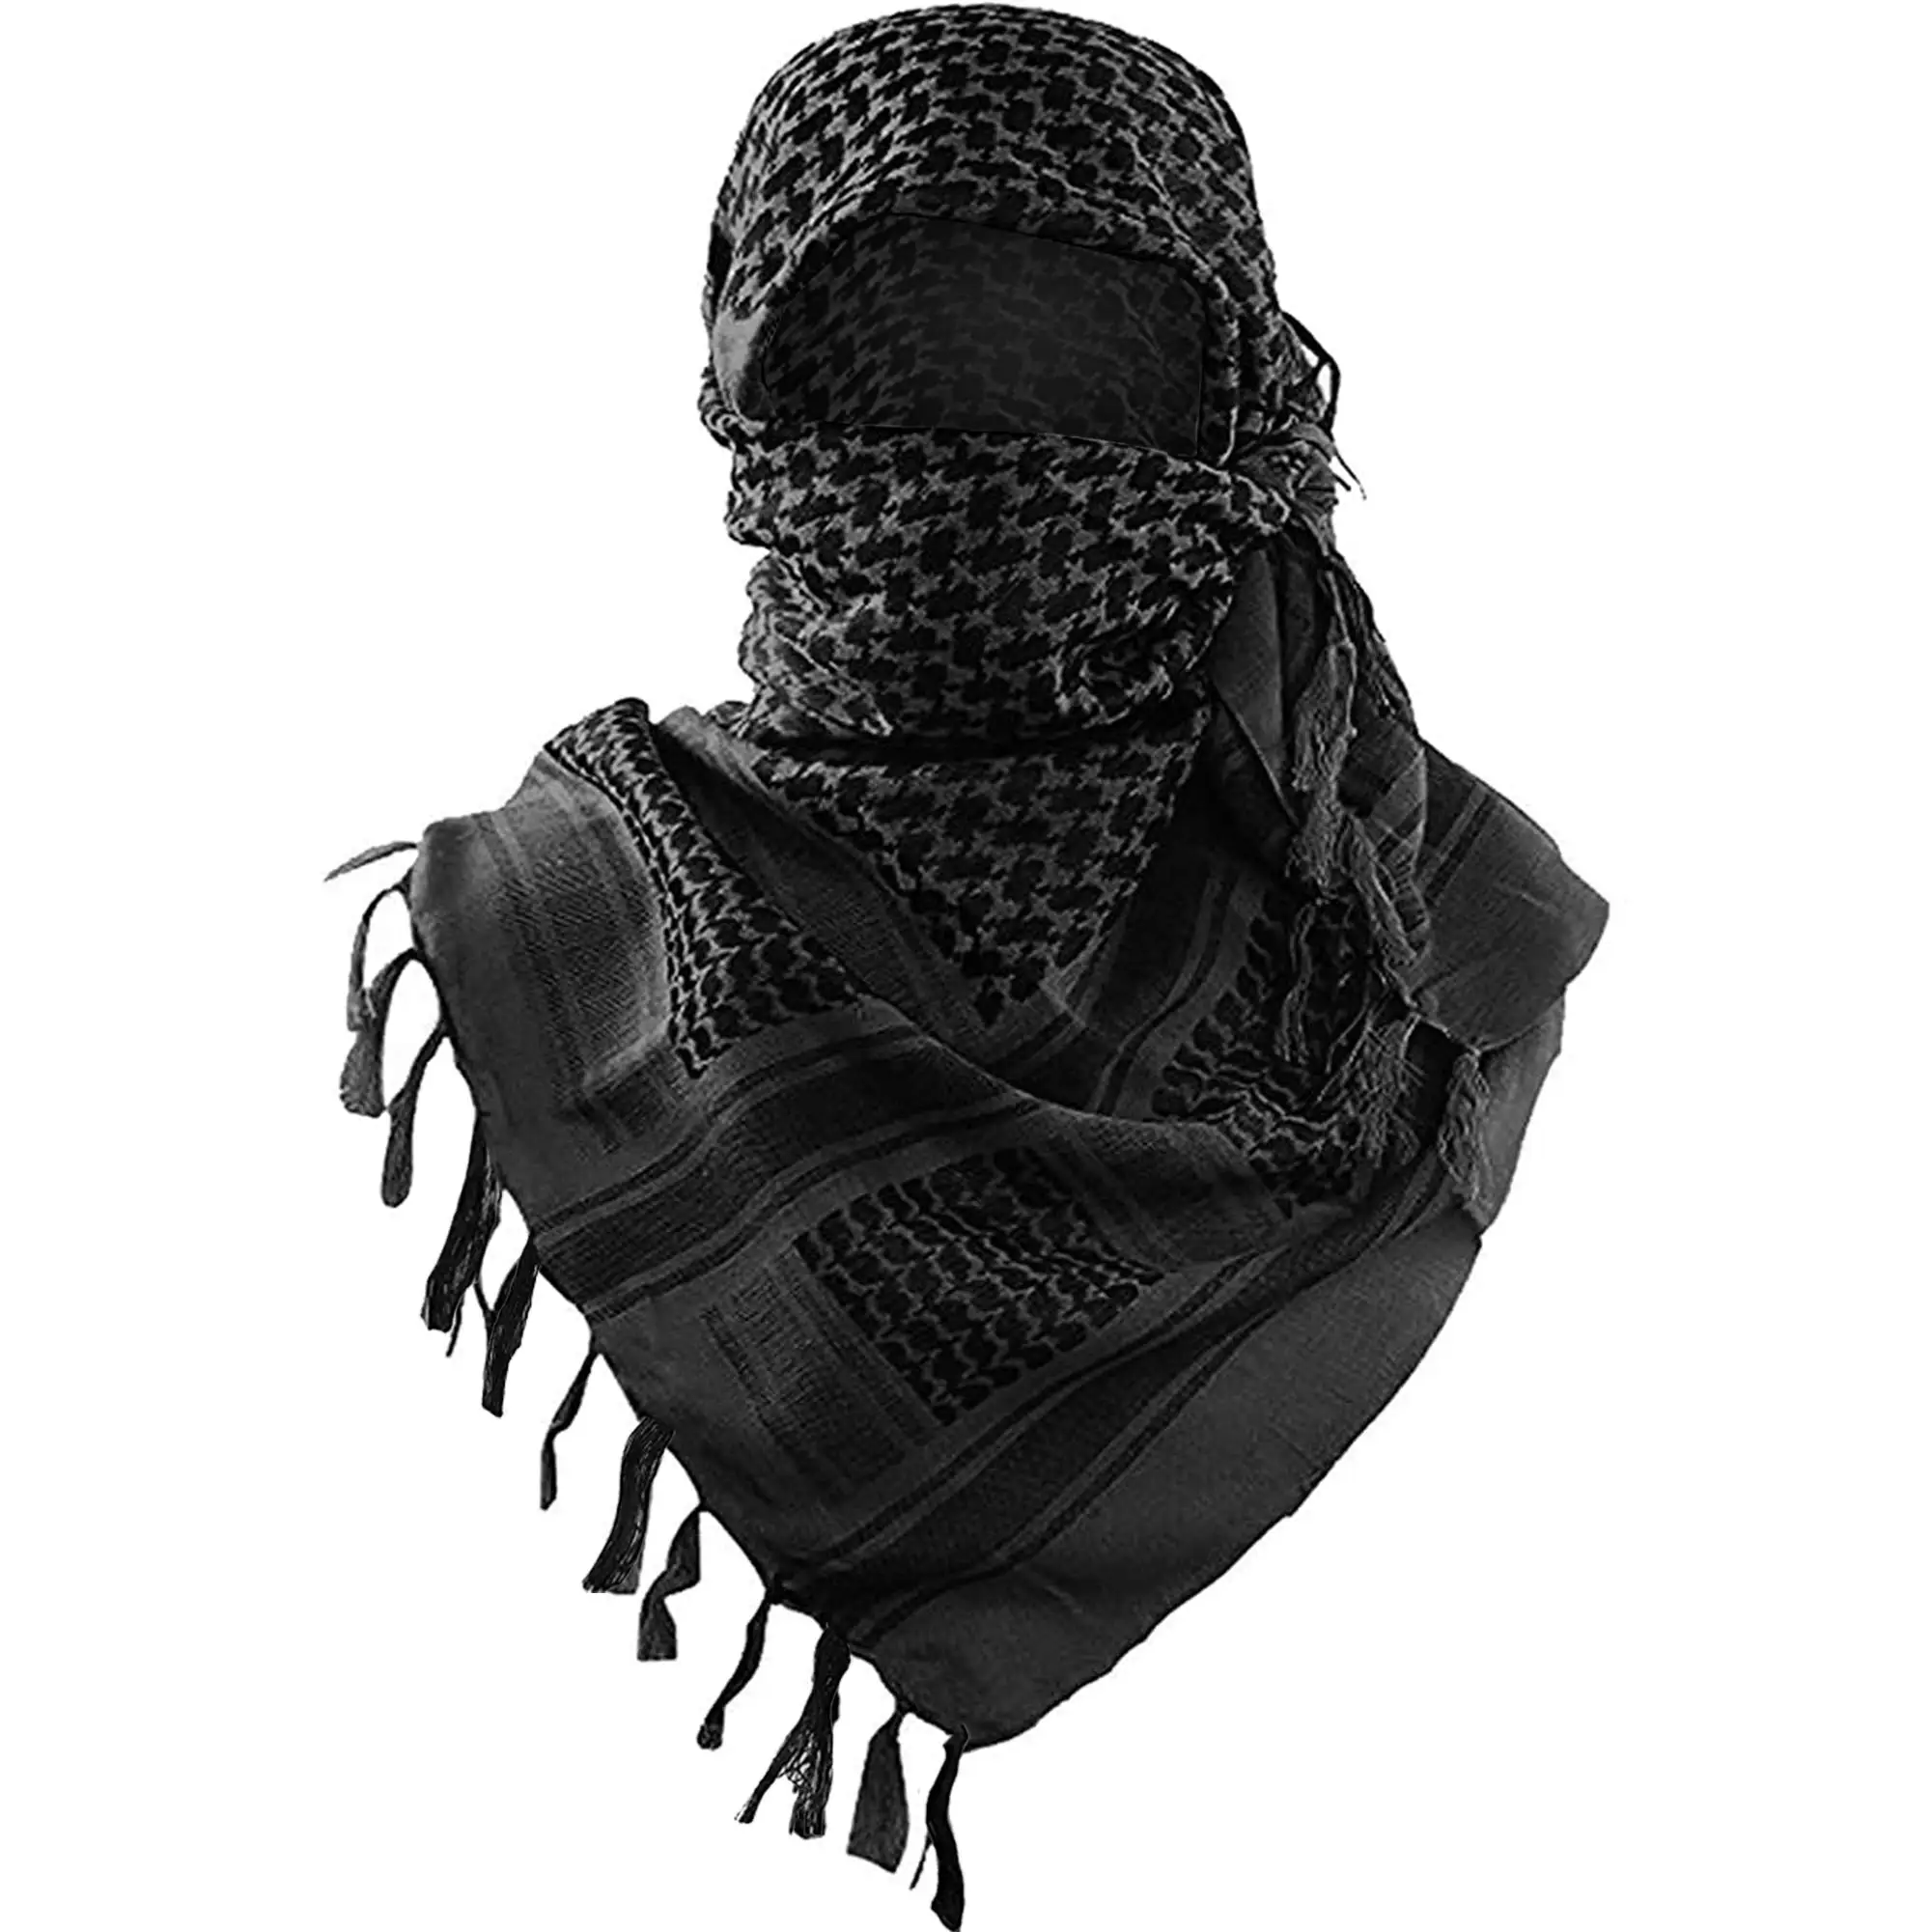 Military Shemagh Tactical Desert Hijab Scarf Muslim Headscarf Islam Arab Cotton Keffiyeh Head Neck Wrap for Men And Women